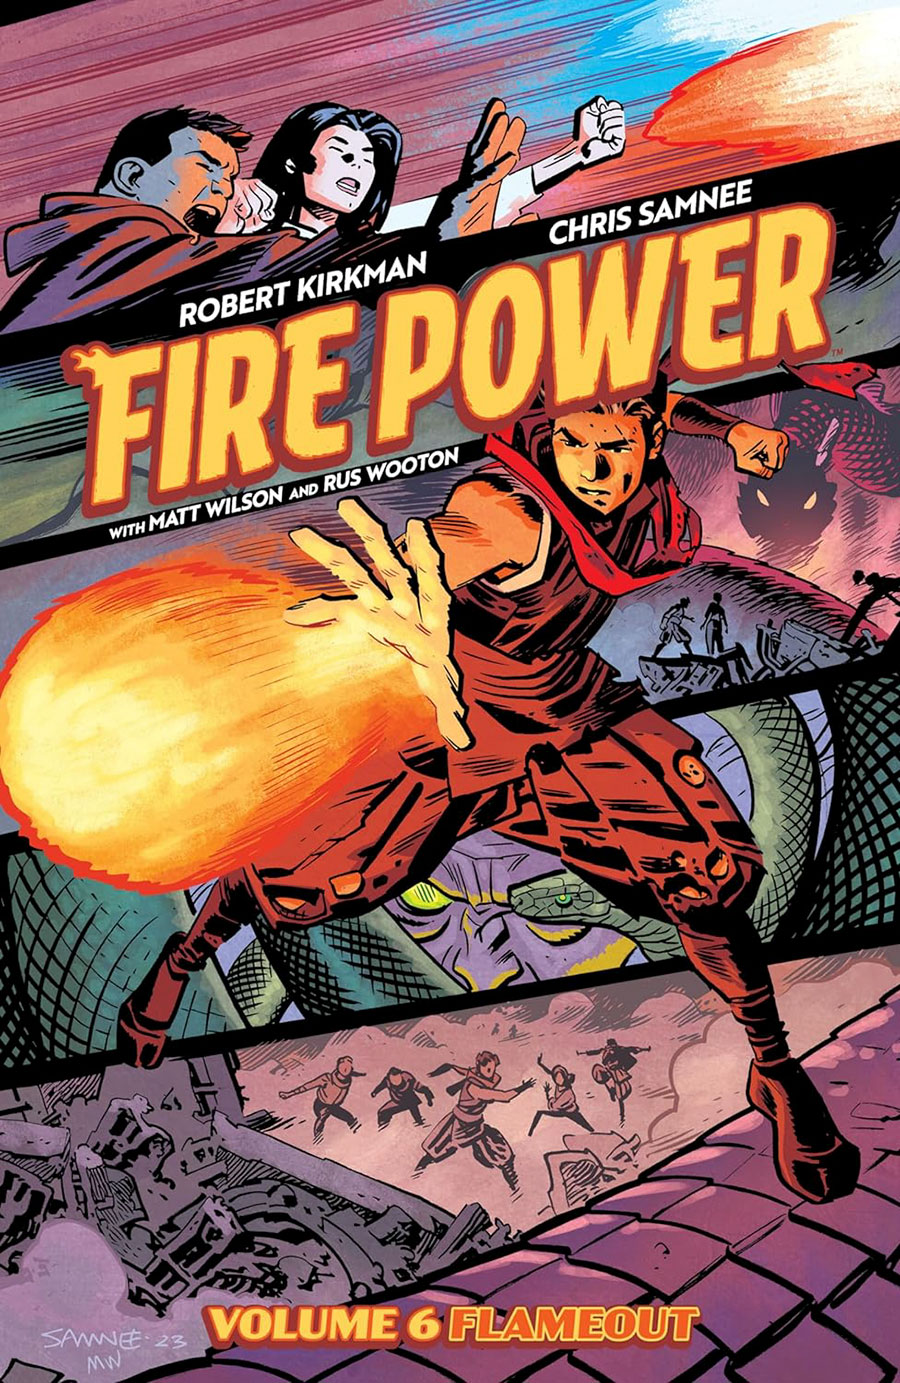 Fire Power By Kirkman & Samnee Vol 6 Flameout TP